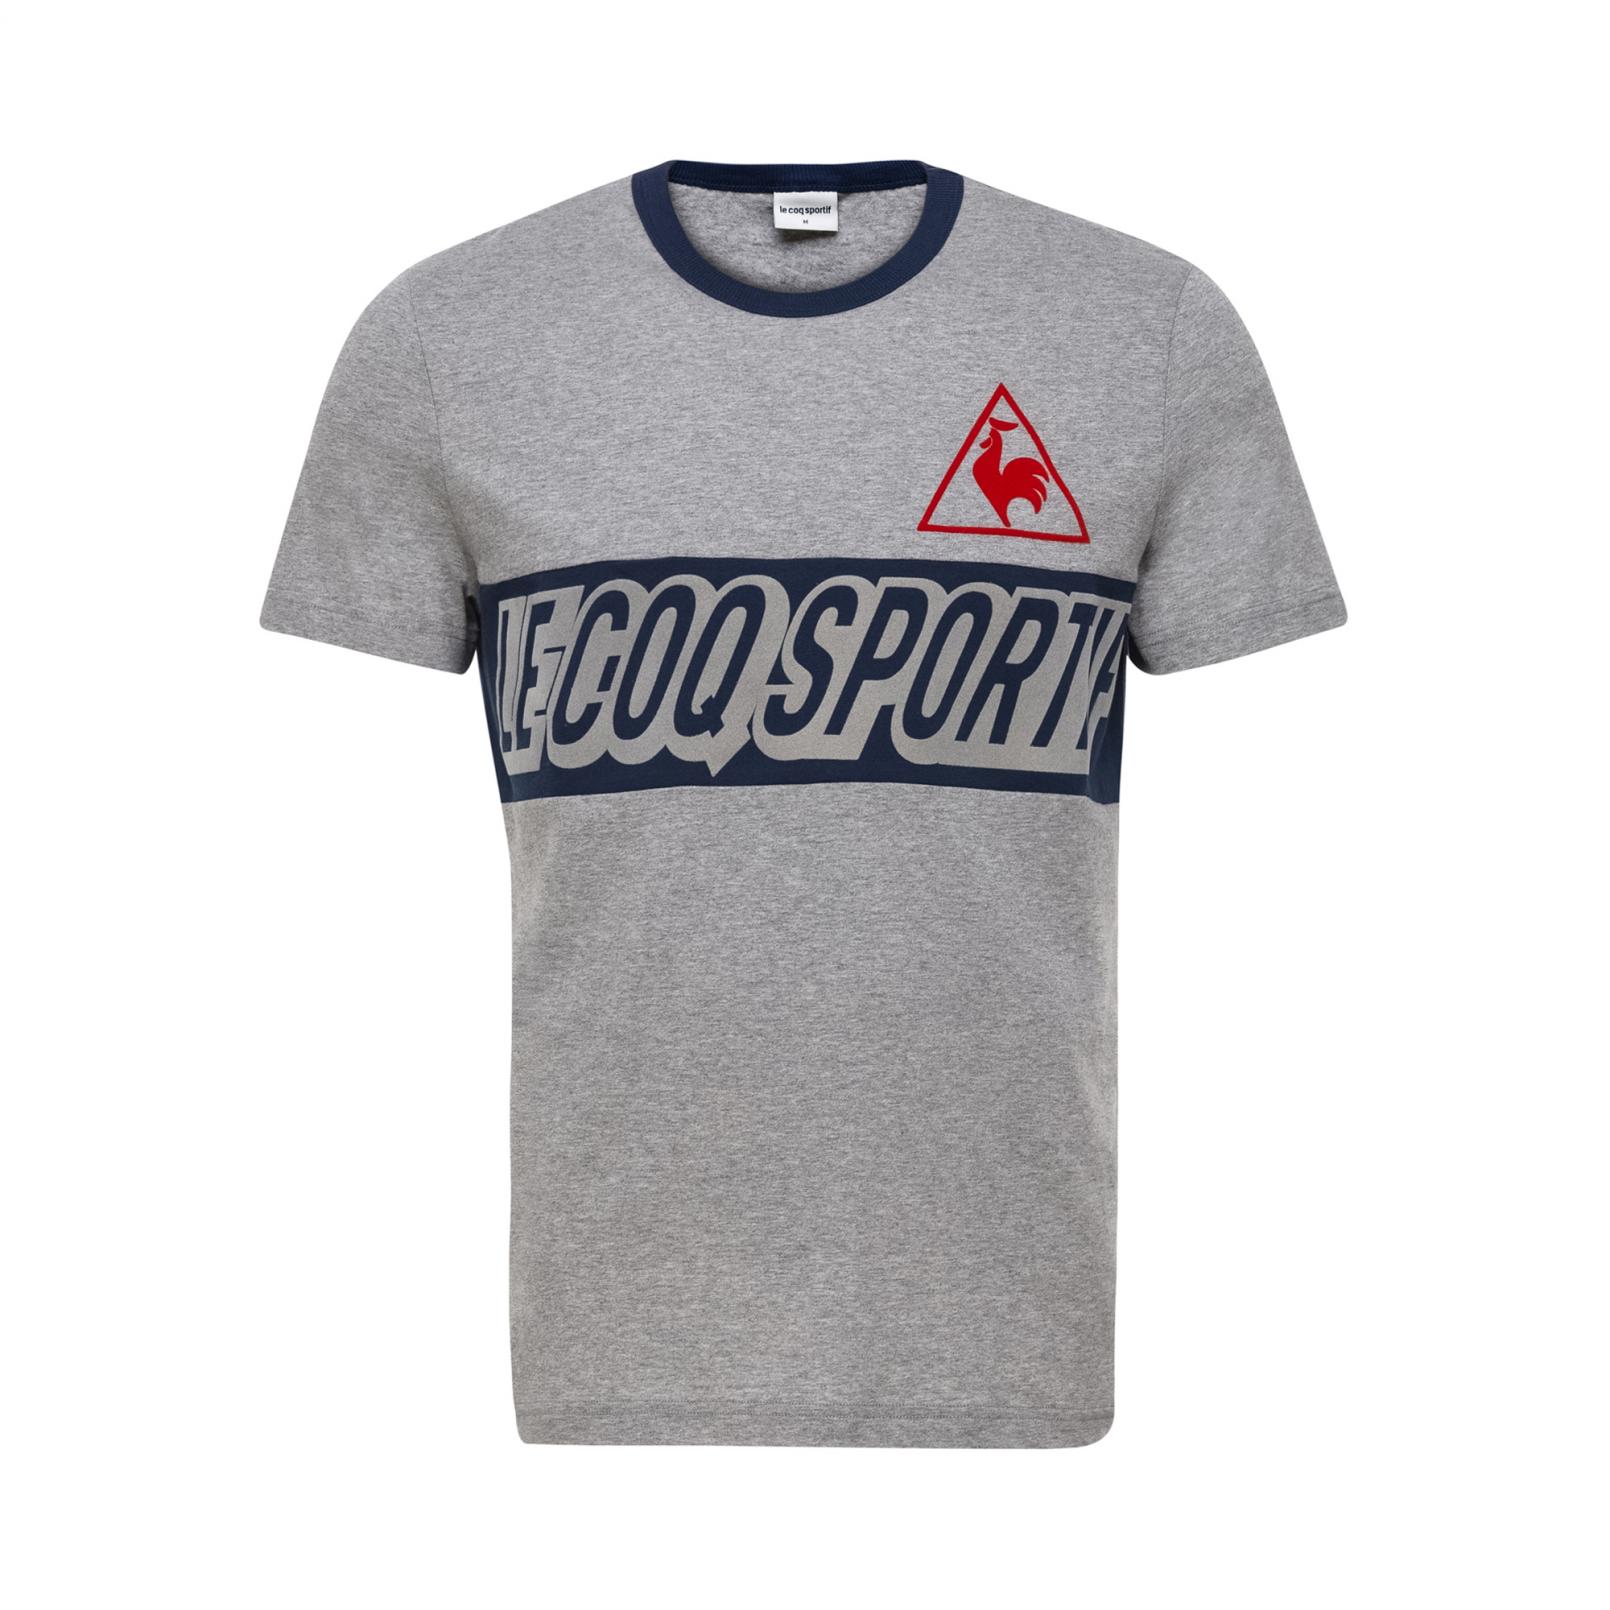 T-shirts – Le Coq Sportif Tricolore Football T-shirt Grey/Blue